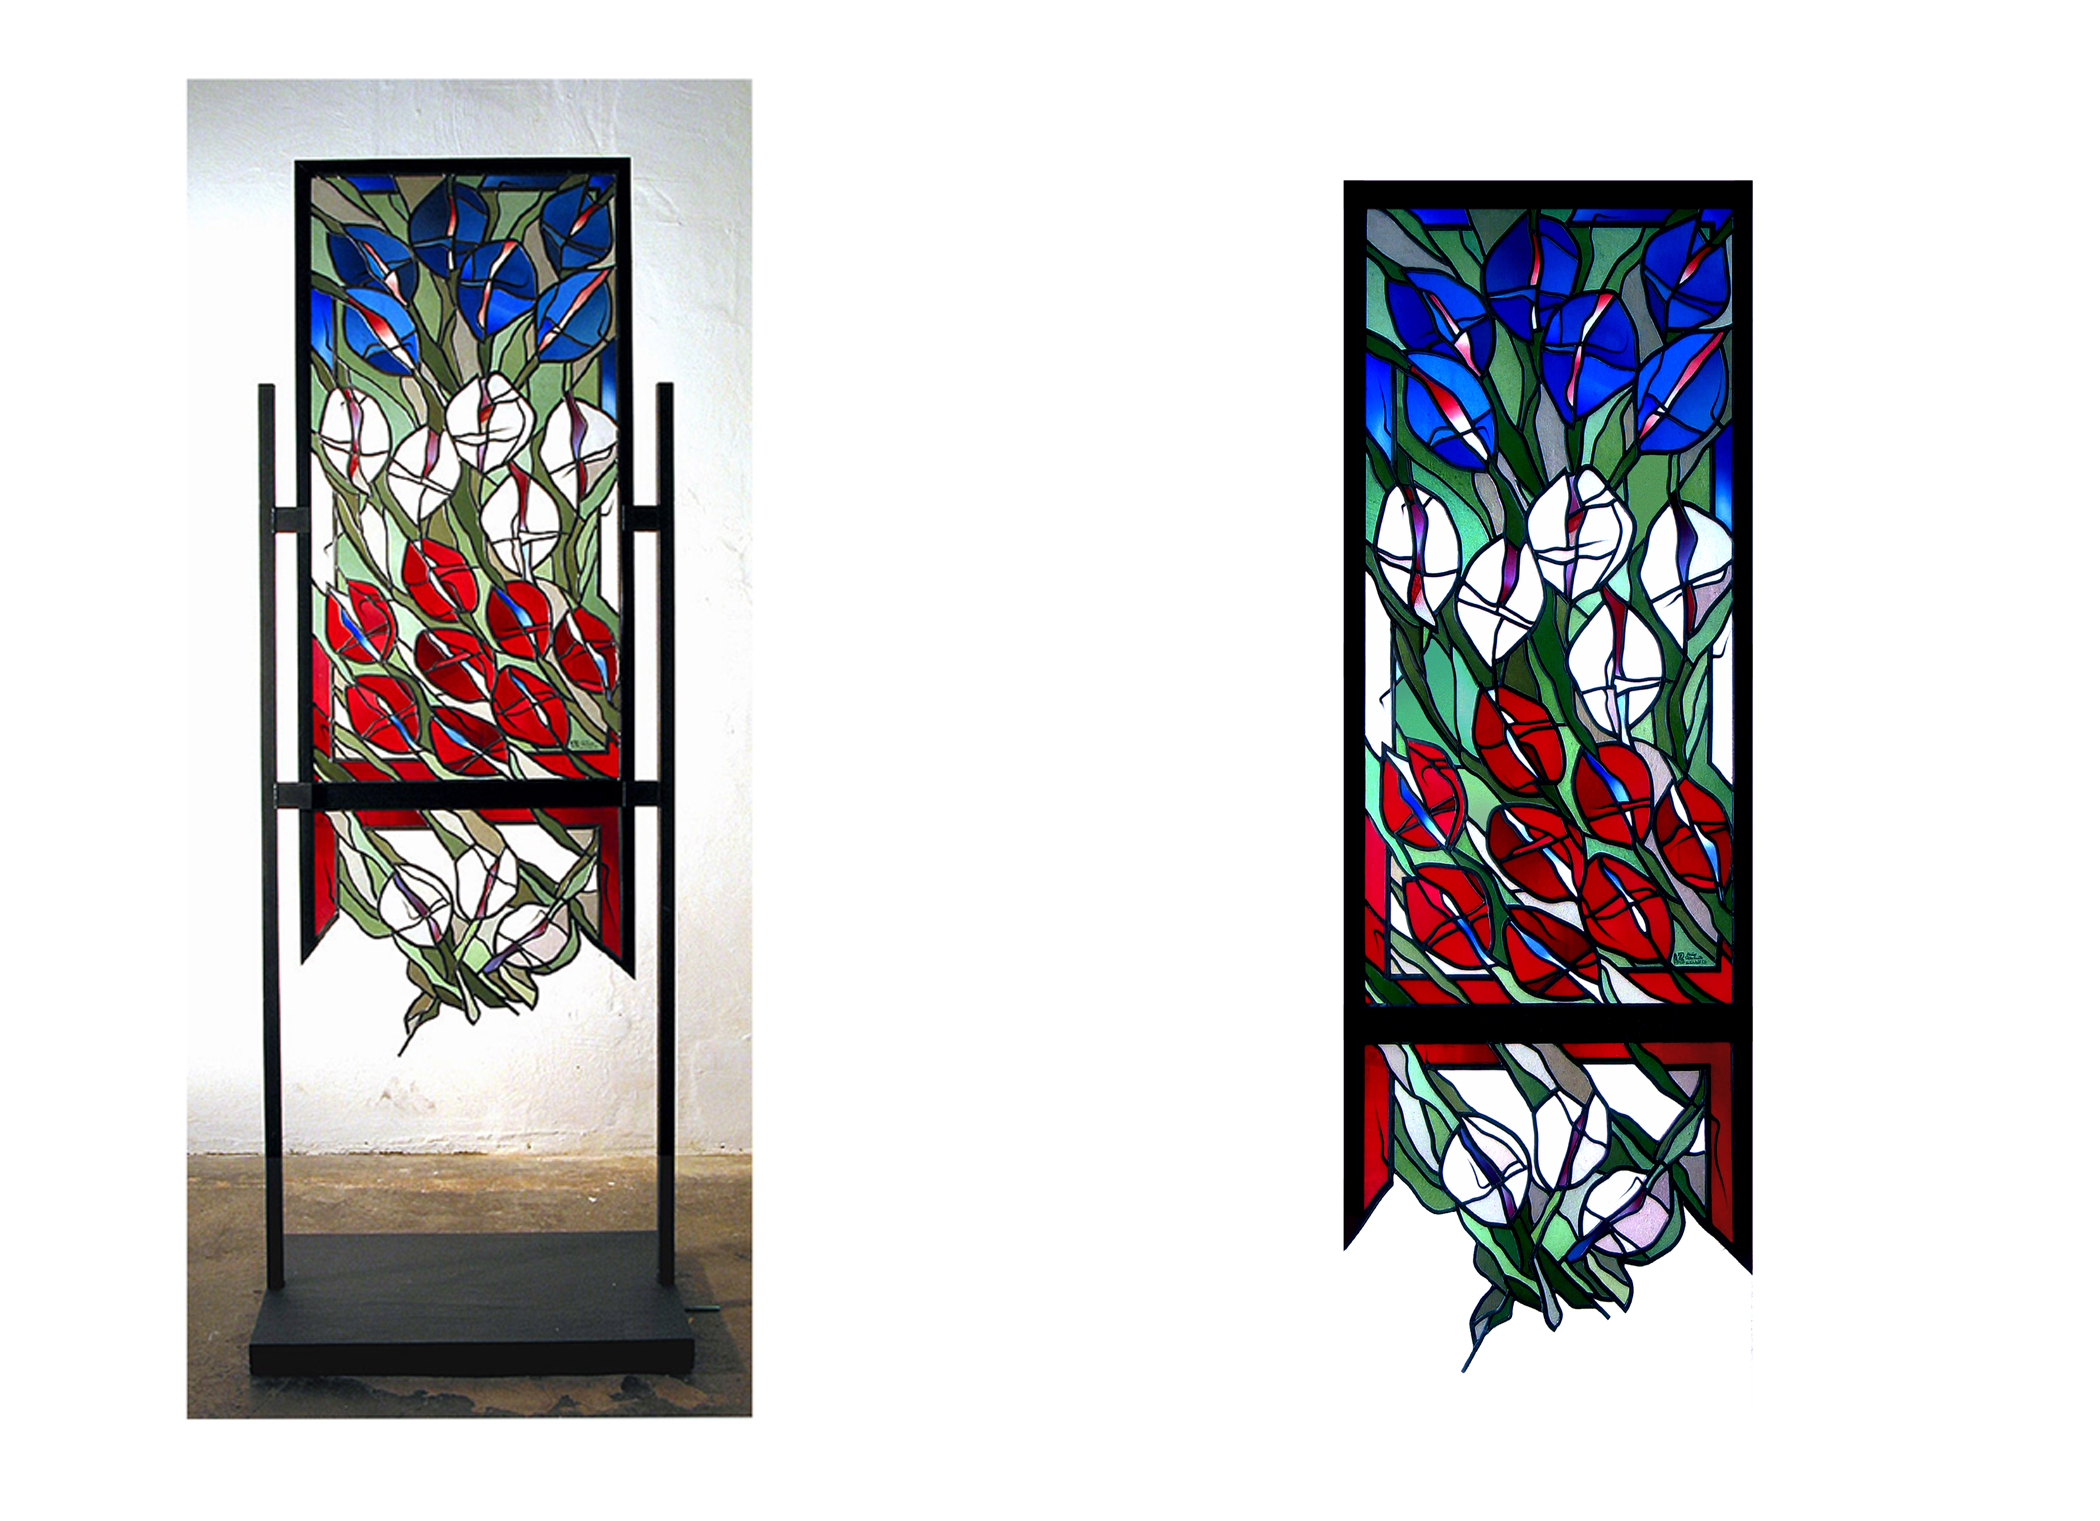 Glasstele Tricolore –Atelier für Glasmalerei - Peter Kuster